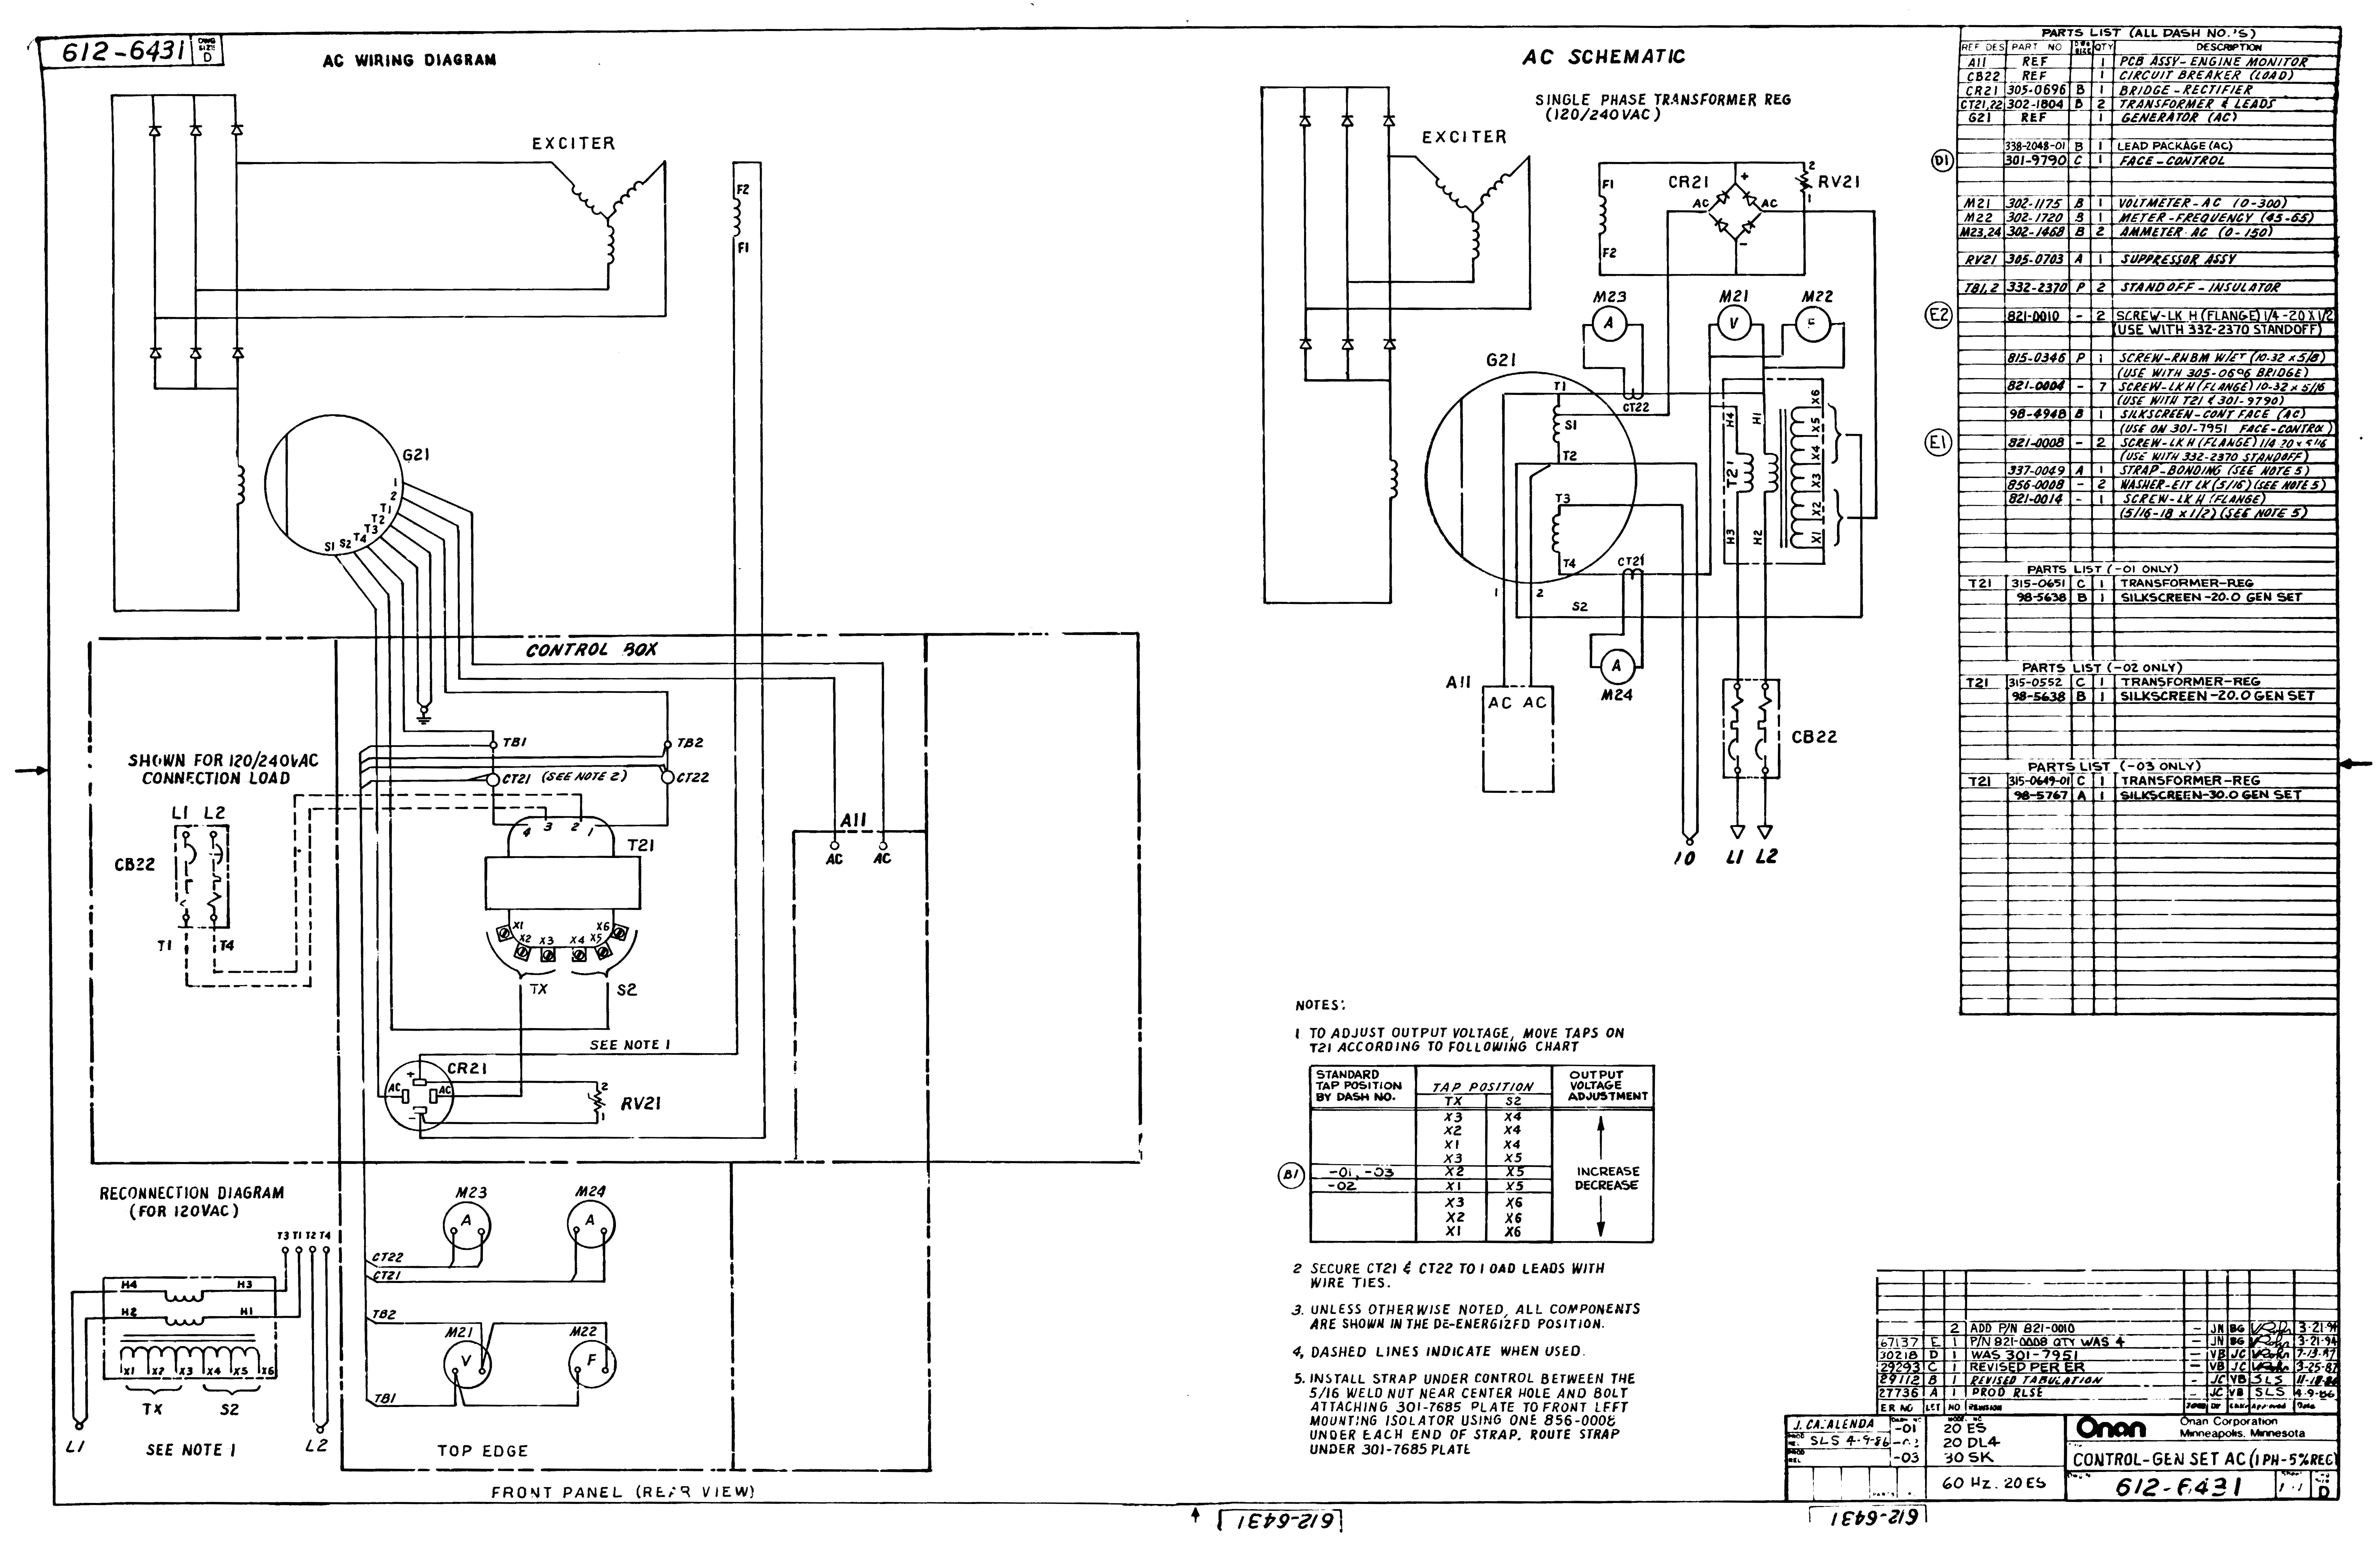 Distributor Wire Diagram 10 Hp Generator Wiring Diagram Wiring Diagrams